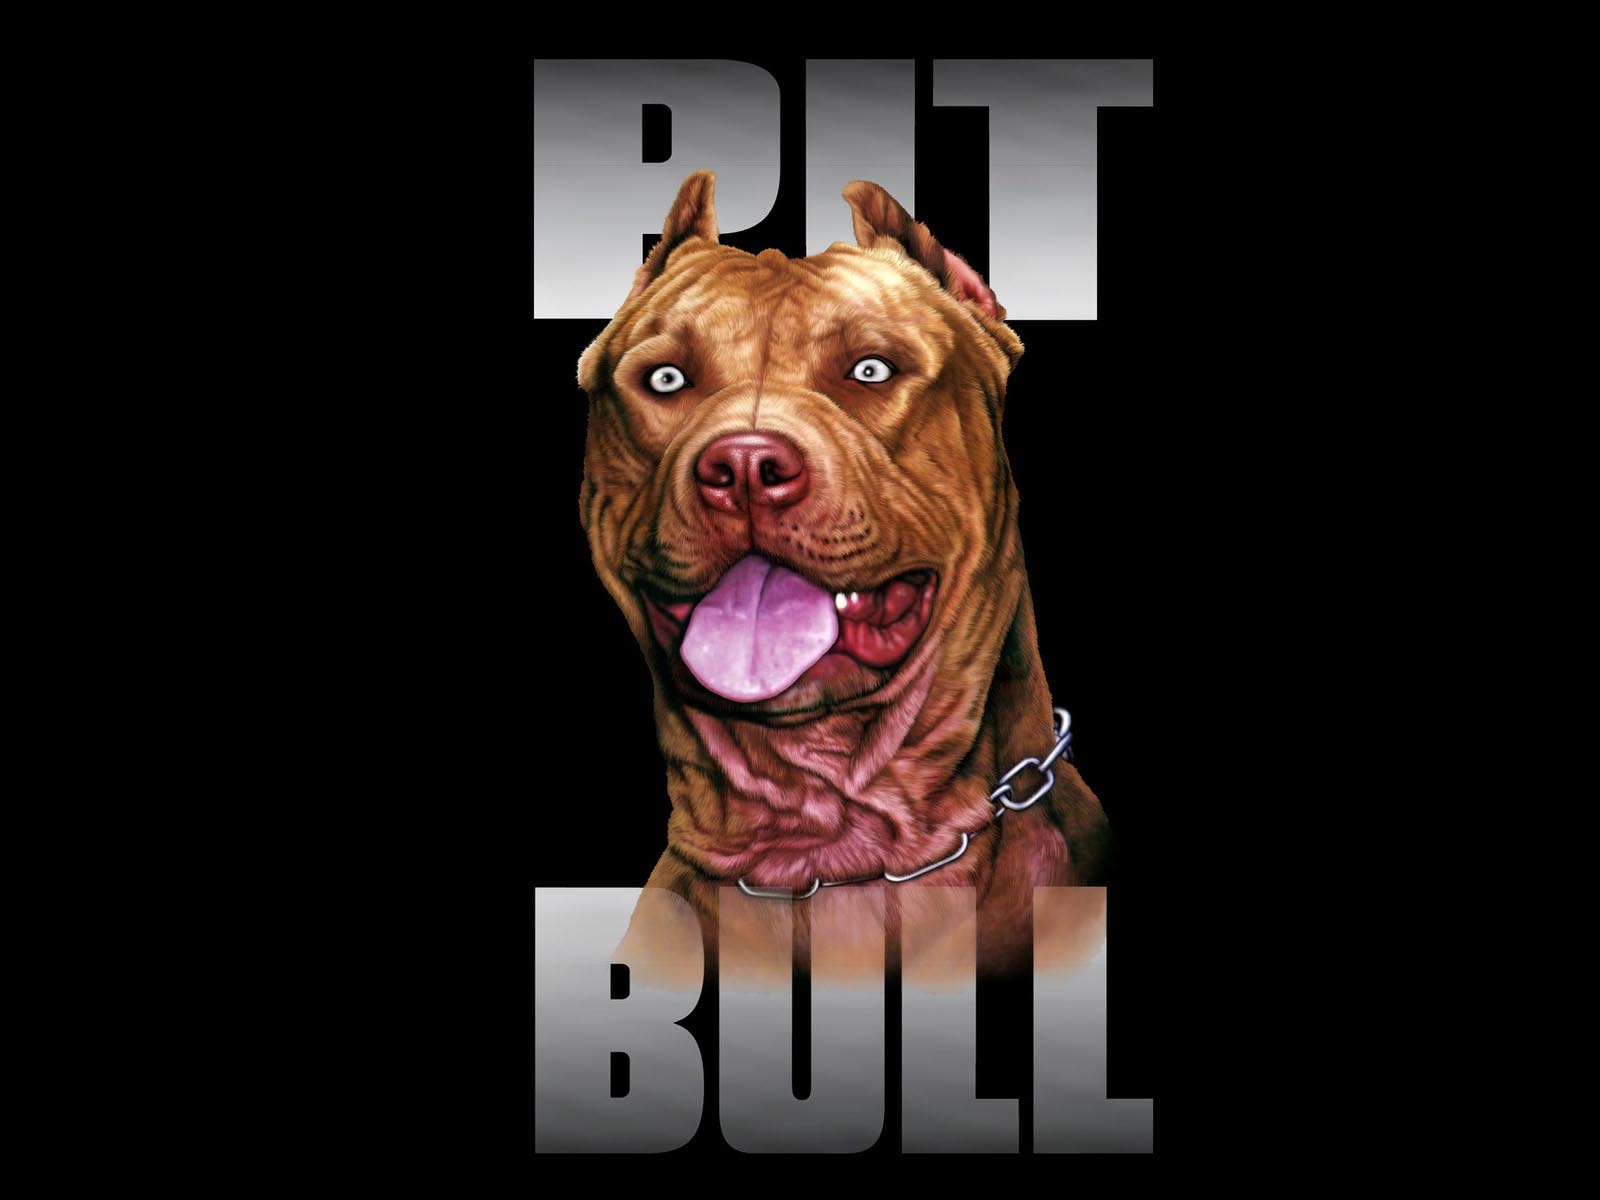 Pitbull Dog Wallpaper HD (Picture)